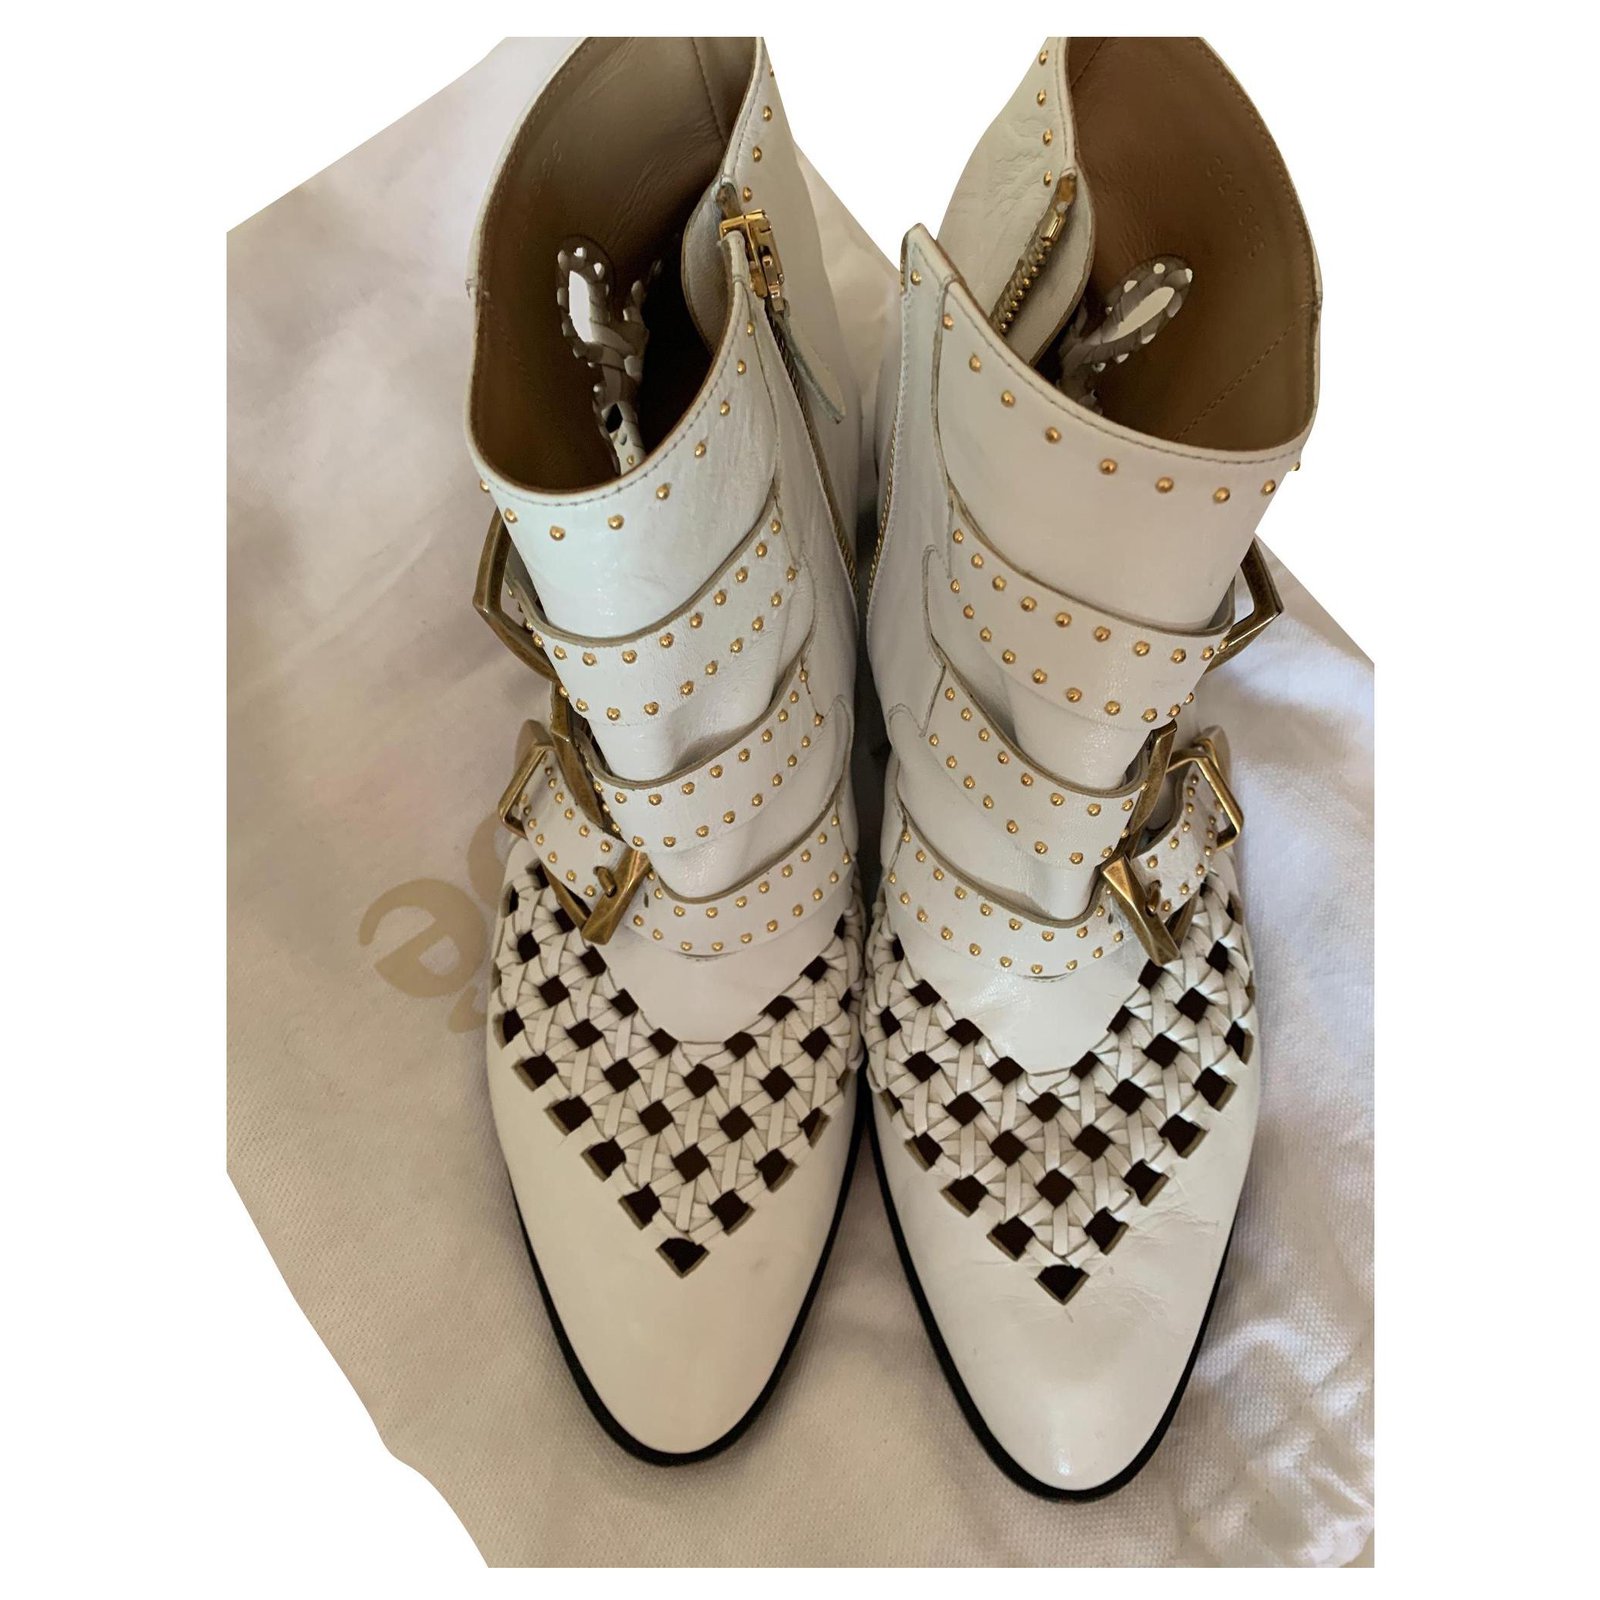 chloe boots white